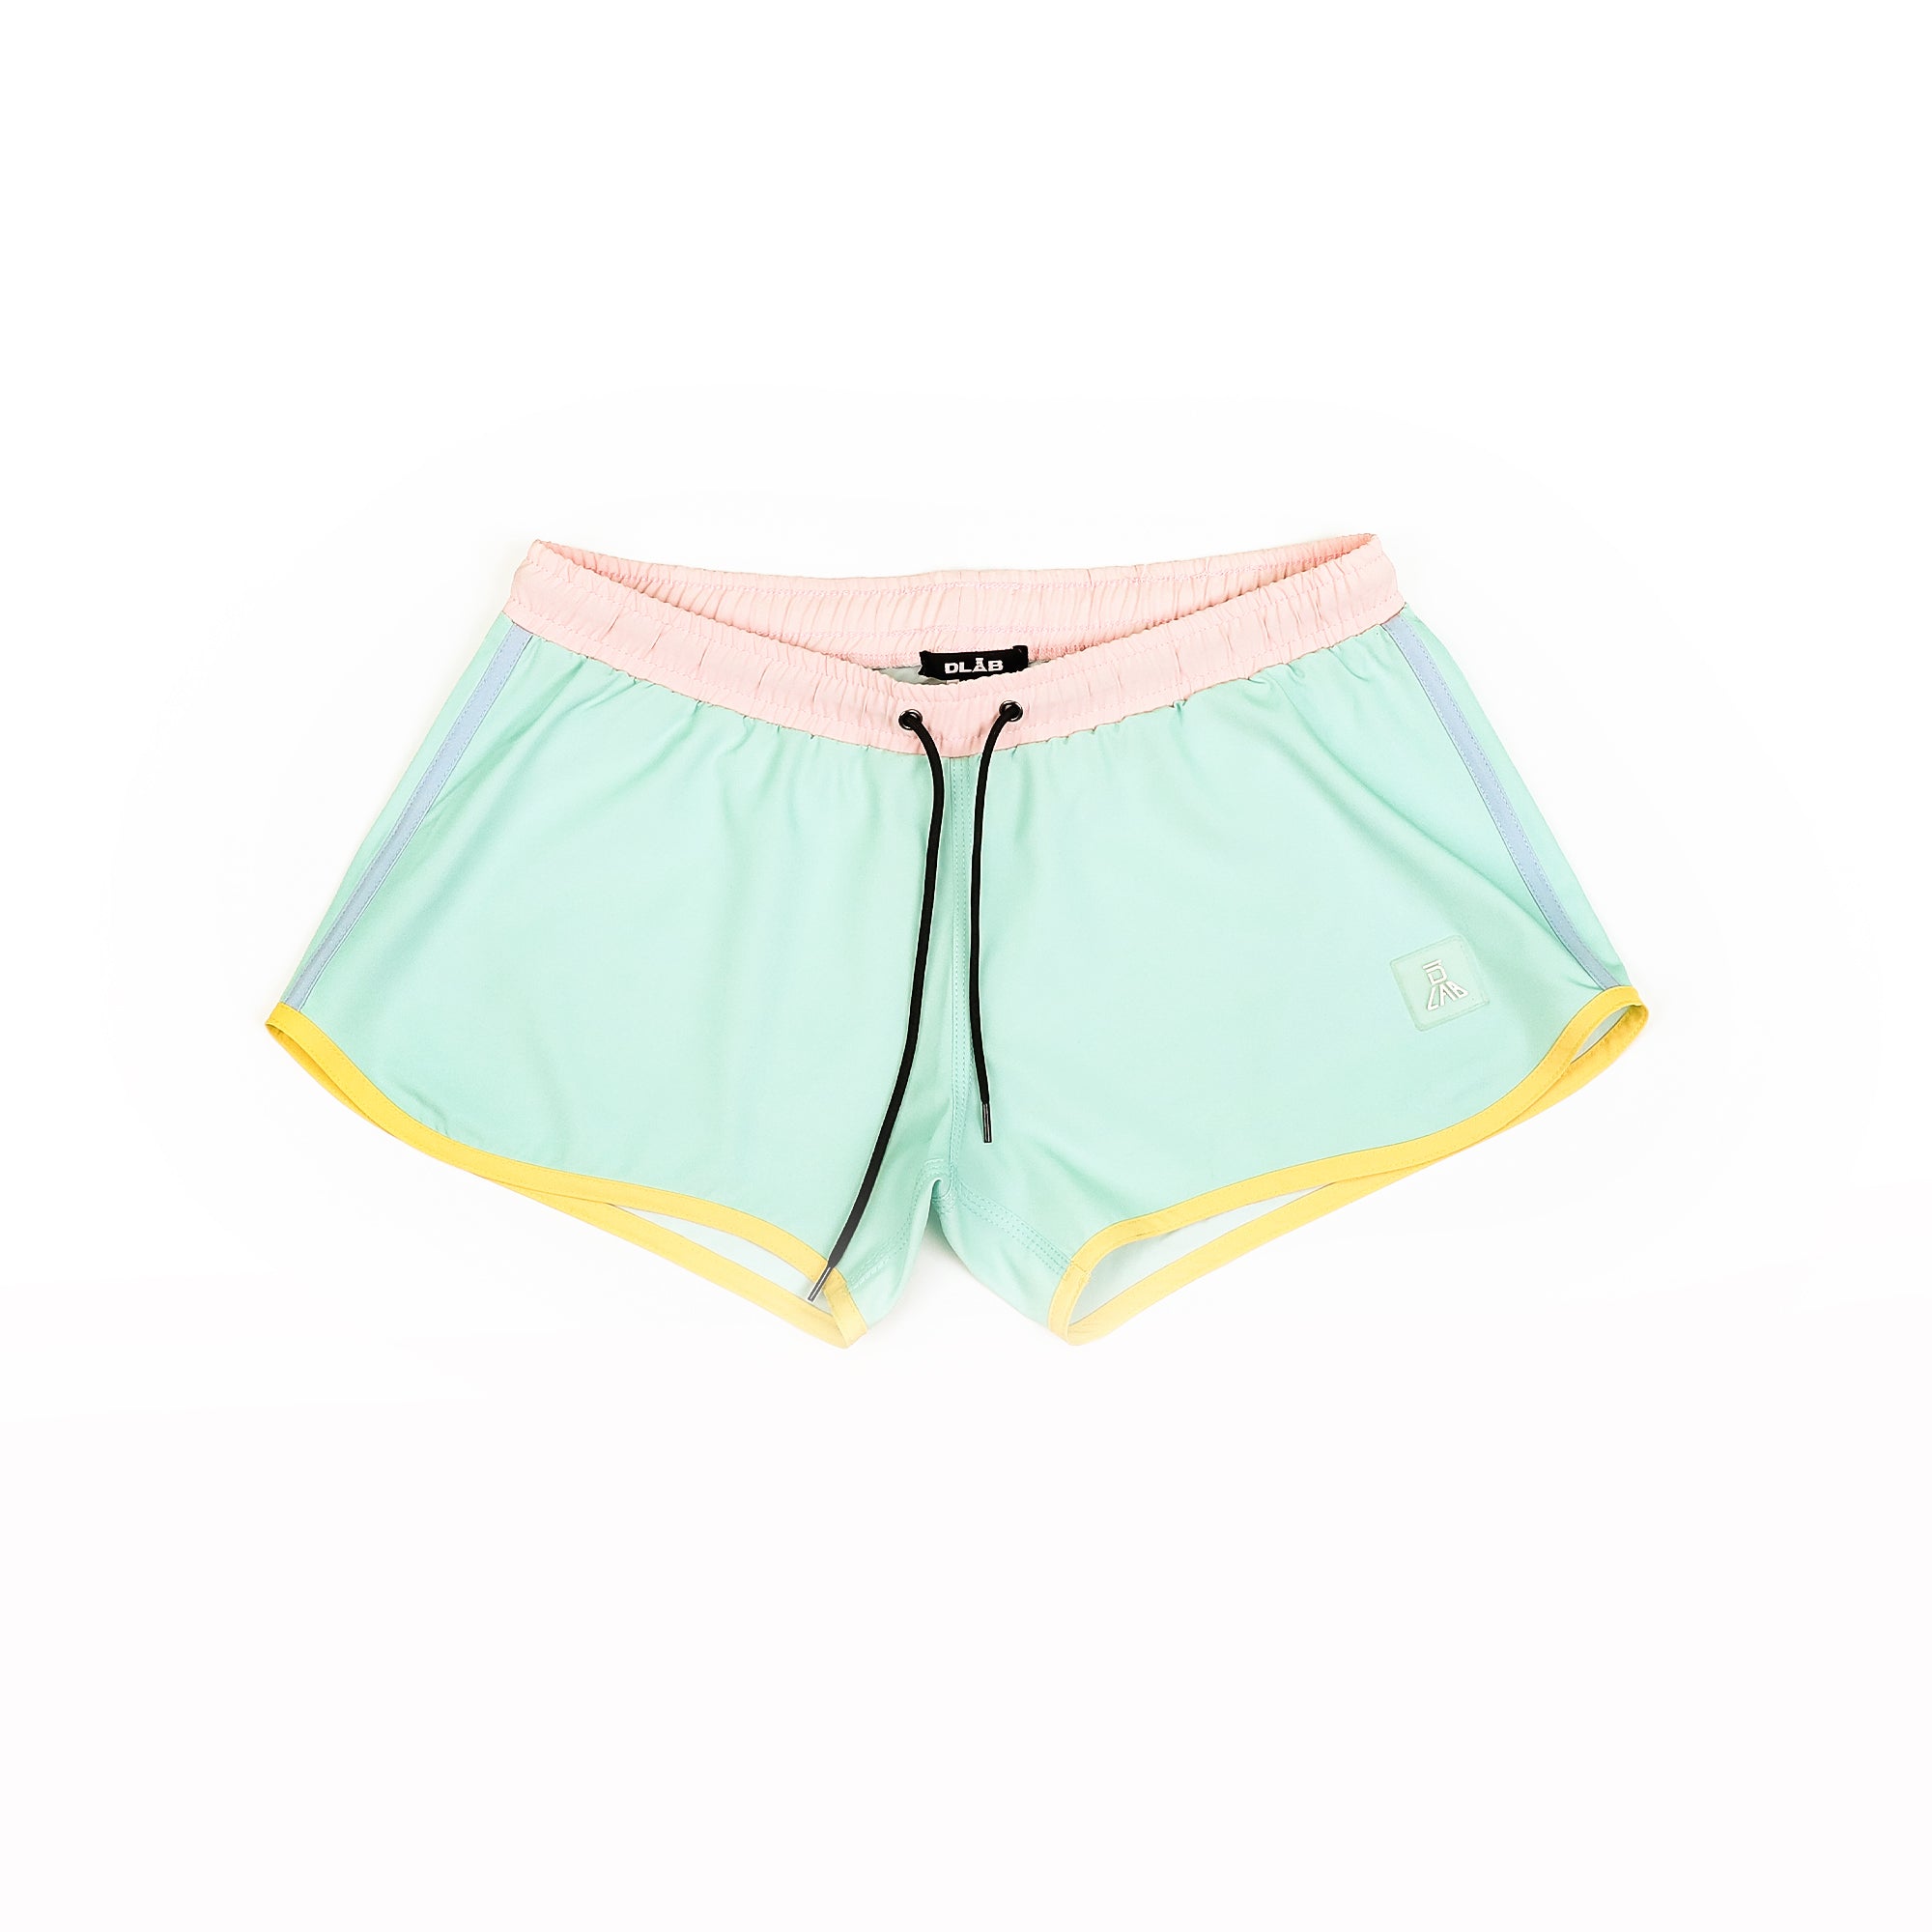 DLAB Women’s Board Shorts (Mint Green)